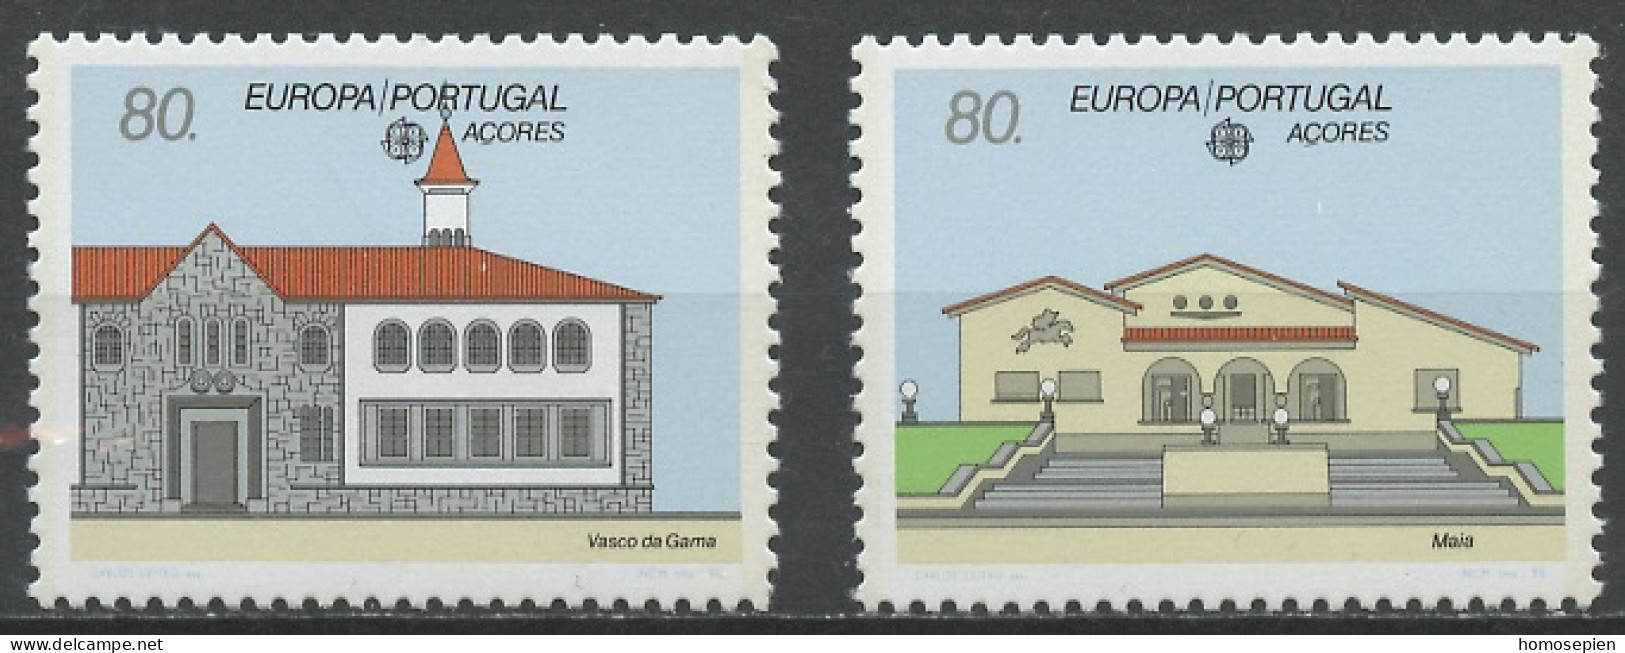 Europa CEPT 1990 Açores - Azores - Azoren - Portugal Y&T N°399 à 400 - Michel N°409 à 410 *** - 1990